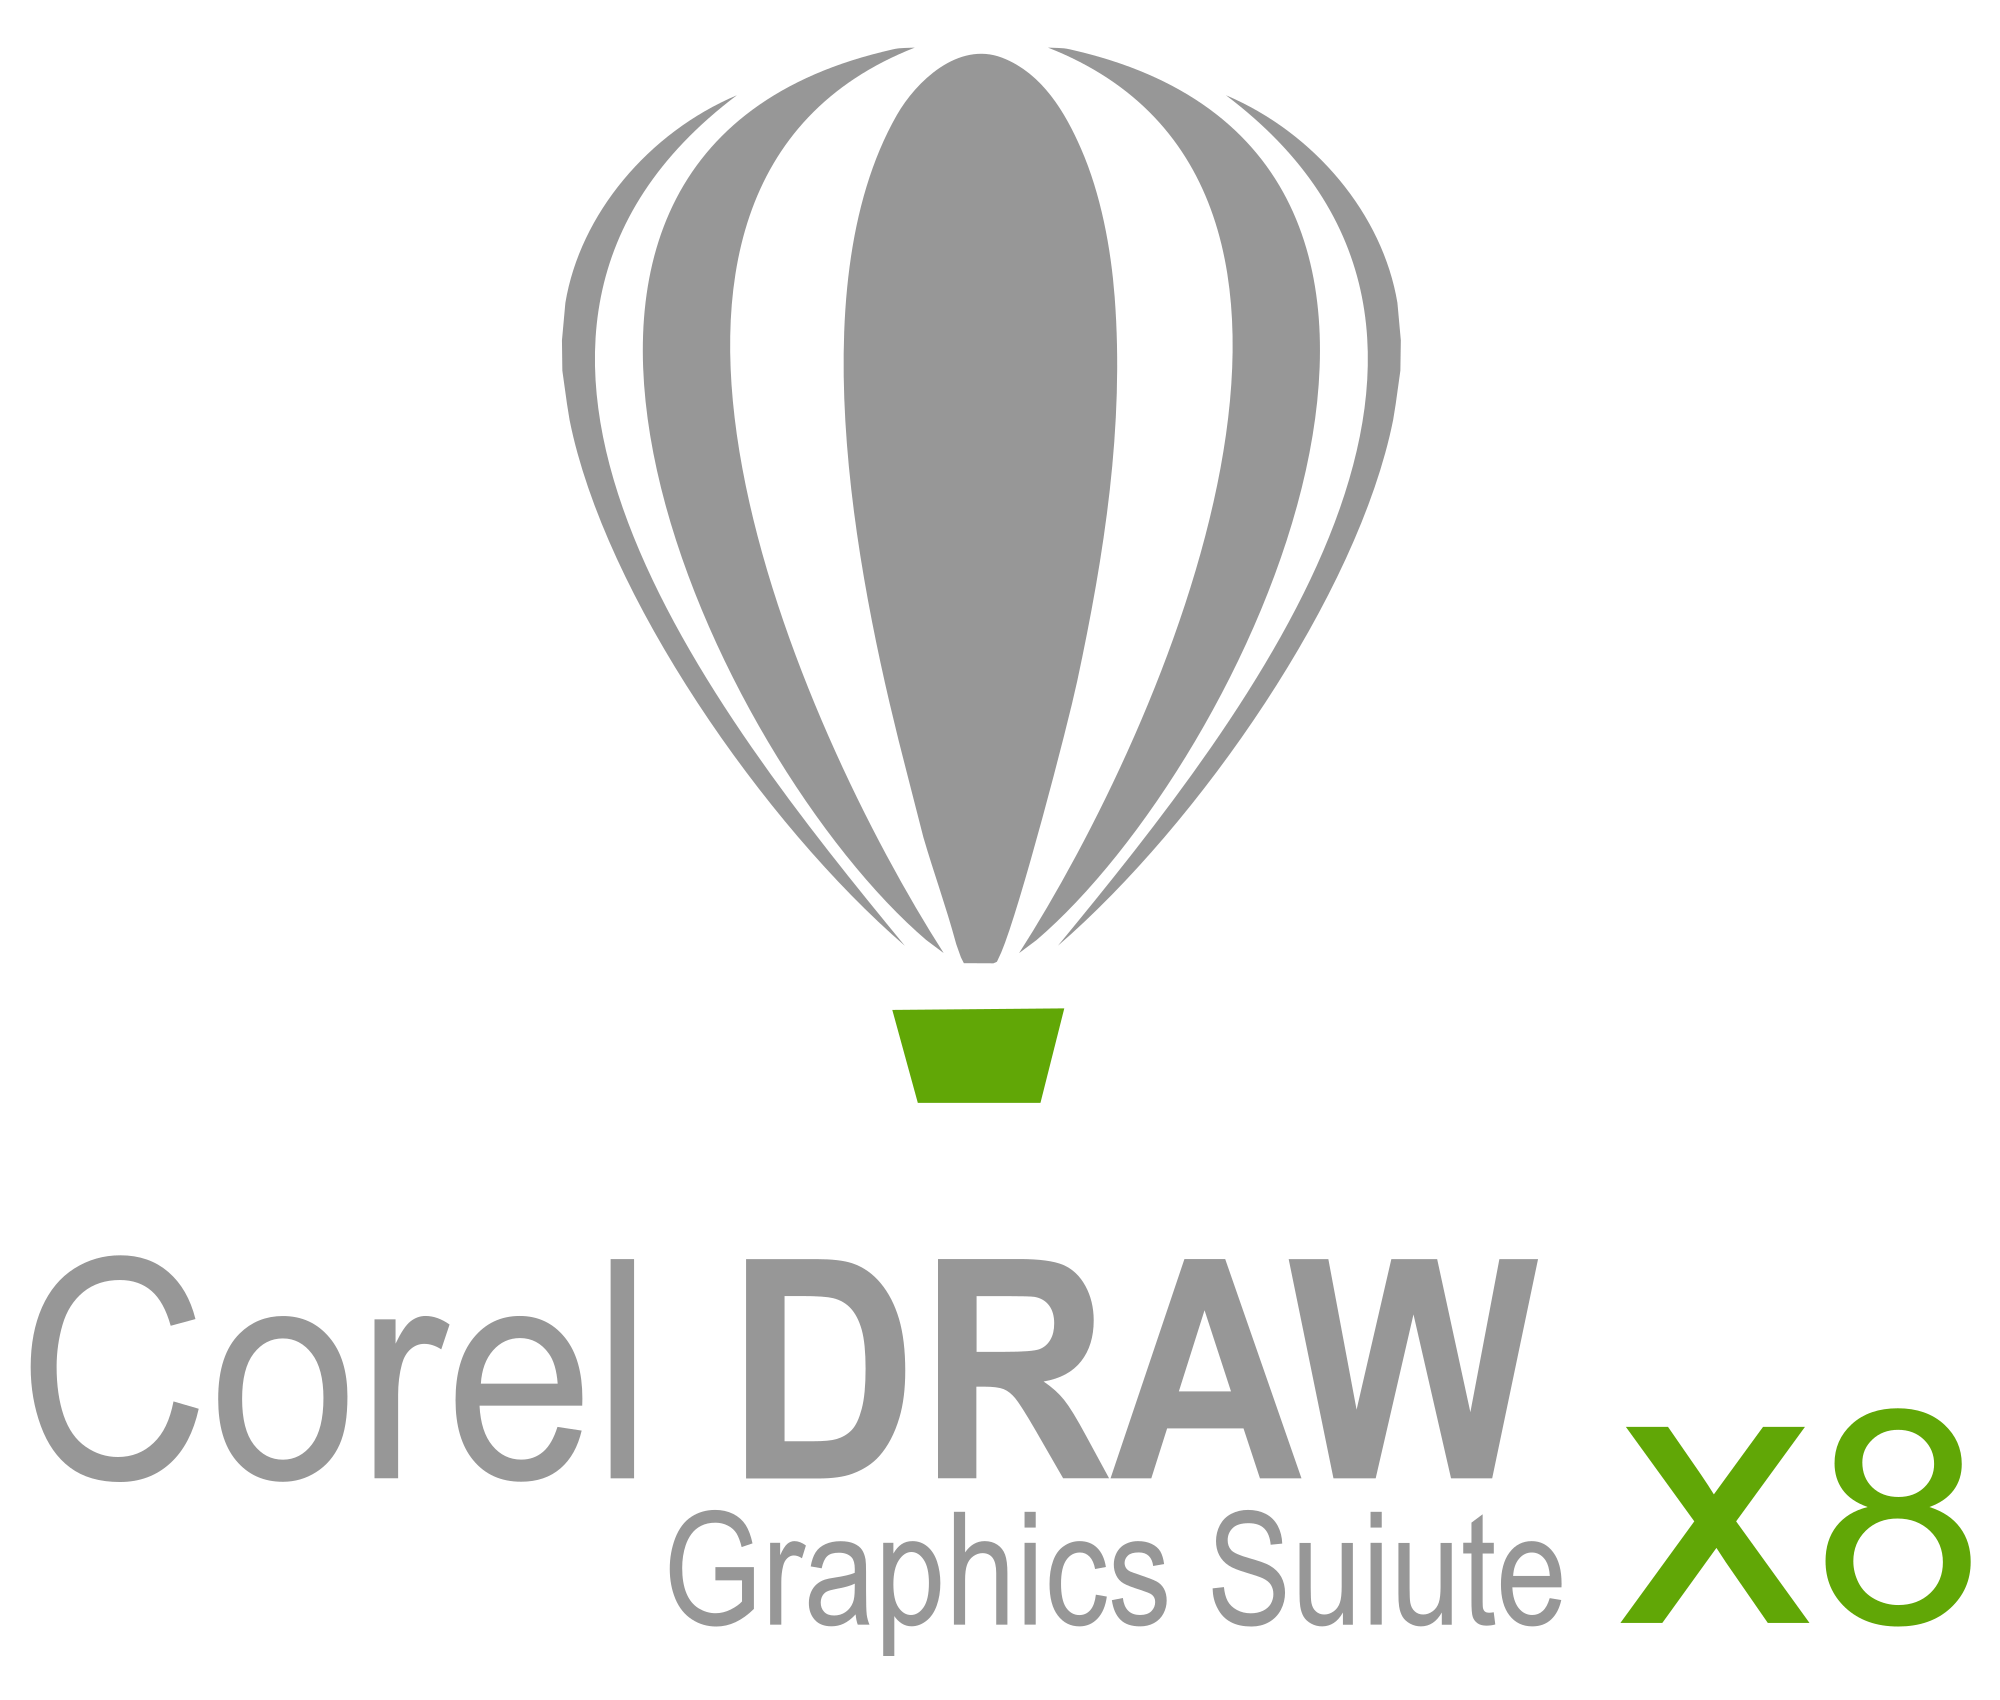 Corel Logo - File:CorelDraw logo.svg - Wikimedia Commons